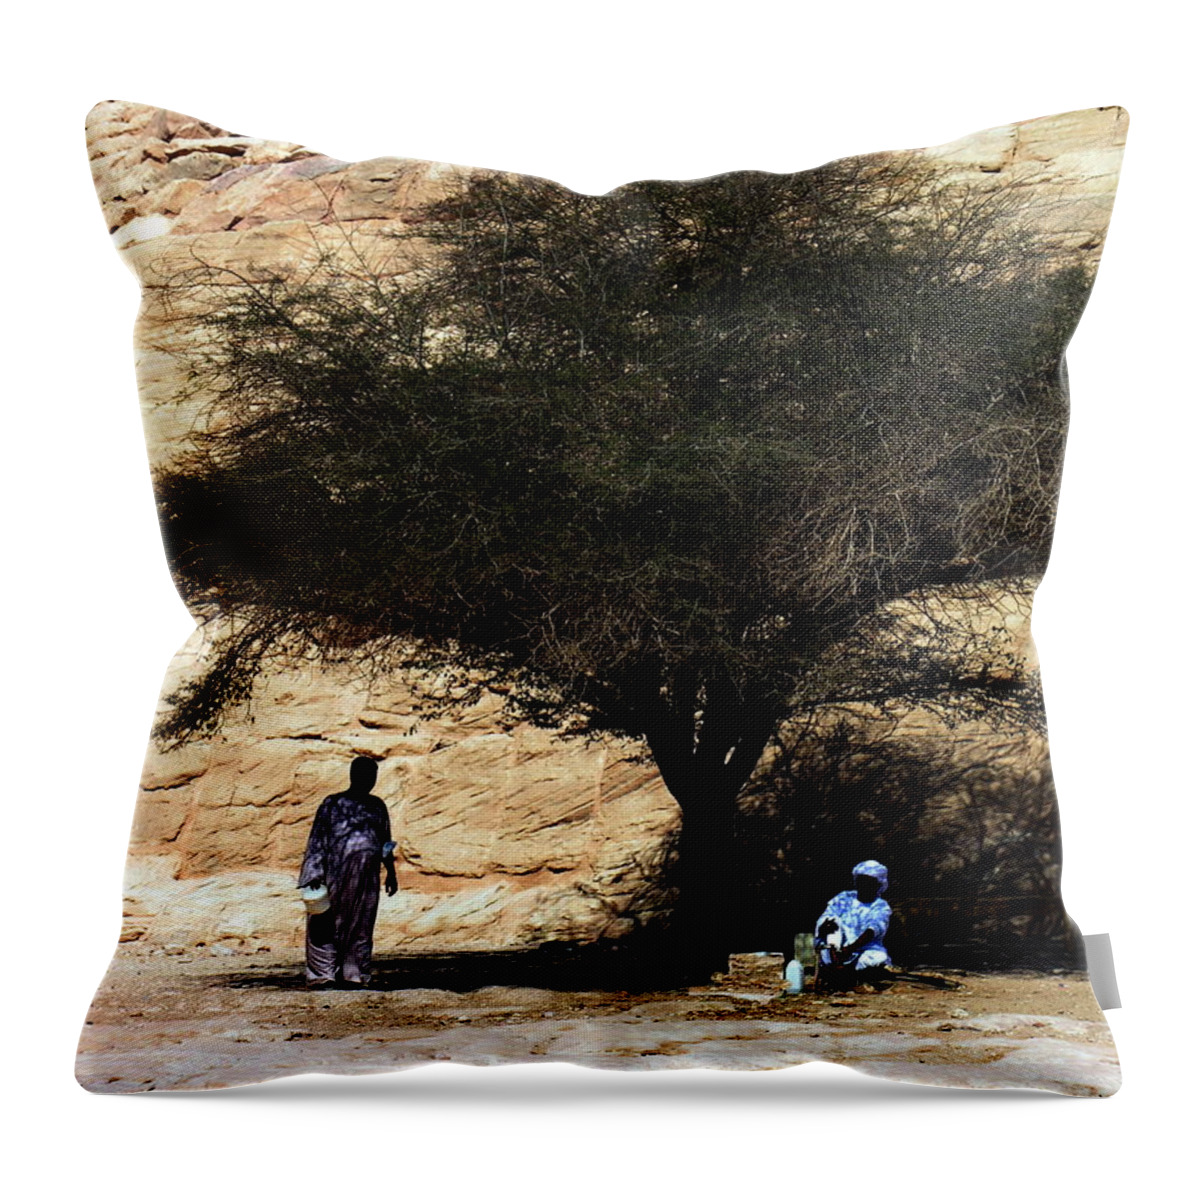 Abu Simbel Throw Pillow featuring the photograph Abu Simbel - Shade by Jacqueline M Lewis